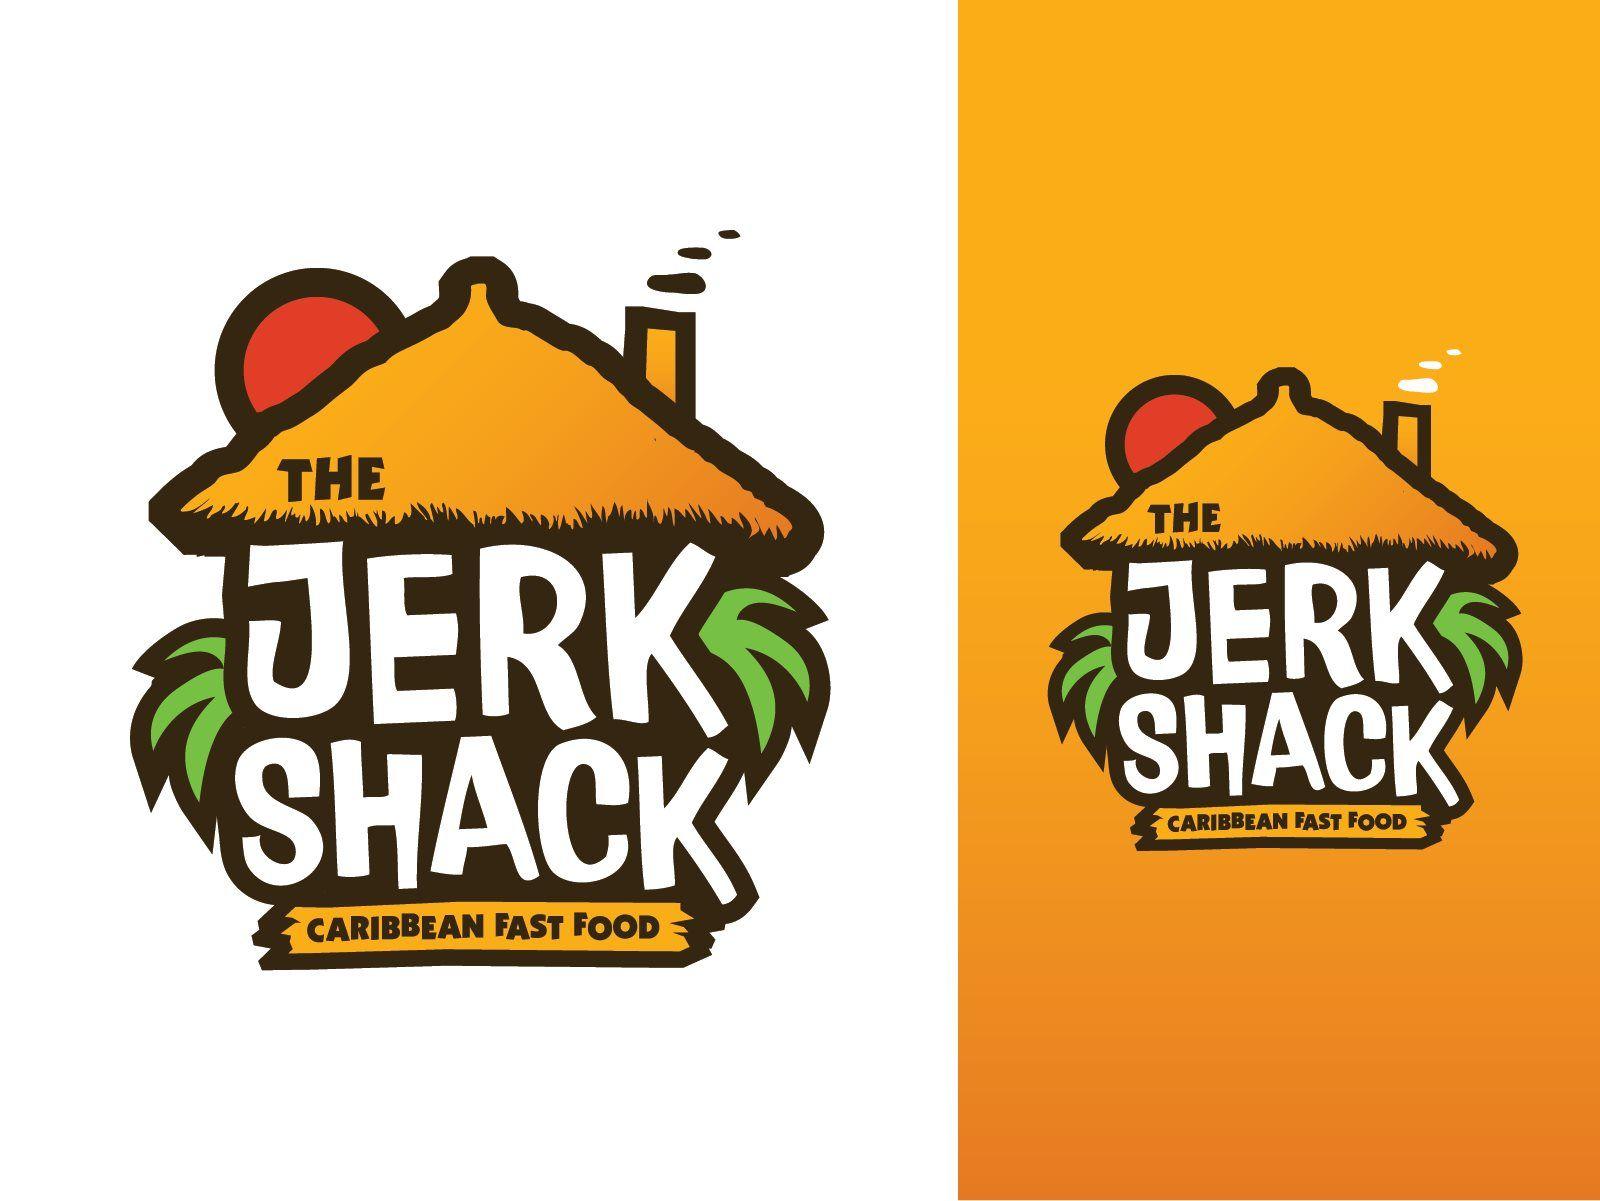 Shack Logo - The Jerk Shack Logo Key West Fl 33040. APW Design's Shack